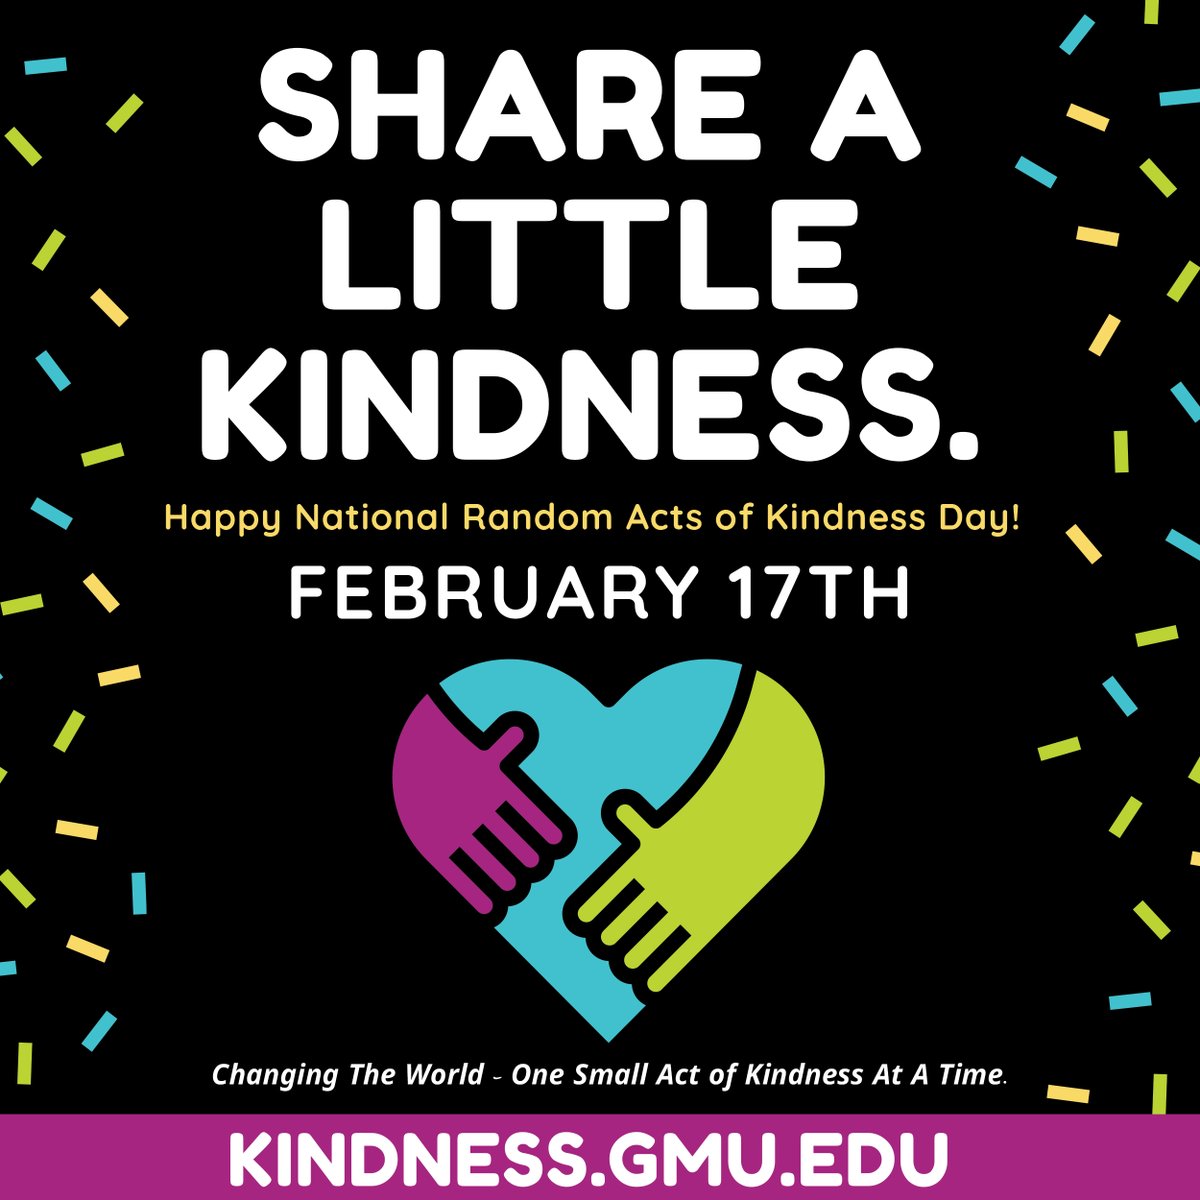 Happy National Random Acts of Kindness Day! Learn how our  #MasonChoosesKindness initiative is emphasizing intentional acts of #kindness every day: www2.gmu.edu/news/2021-02/m…
#RAKDay #RAKWeek #ExploreTheGood #MakeKindnessTheNorm 
@GeorgeMasonNews @GeorgeMasonU @Mason_Kindness